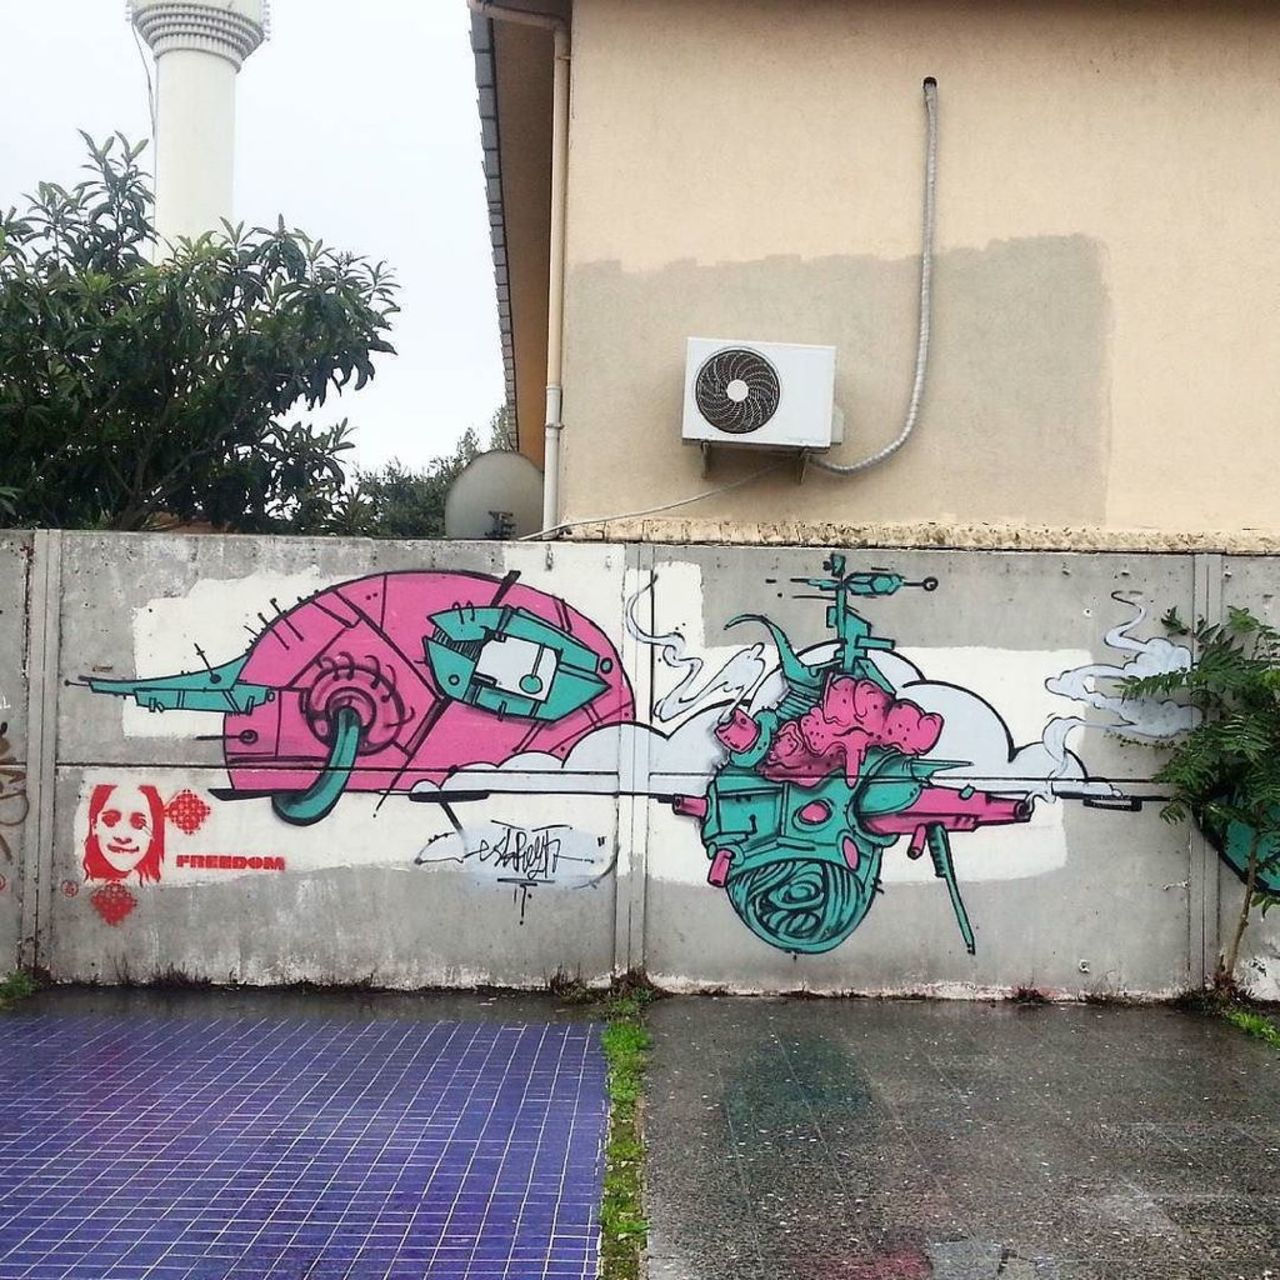 #streetartkadikoy #streetart #graffiti #publicart #urbanart #sokaksanatı #streetartistanbul #istanbulstreetart #gra… https://t.co/xMlo0rFOAd